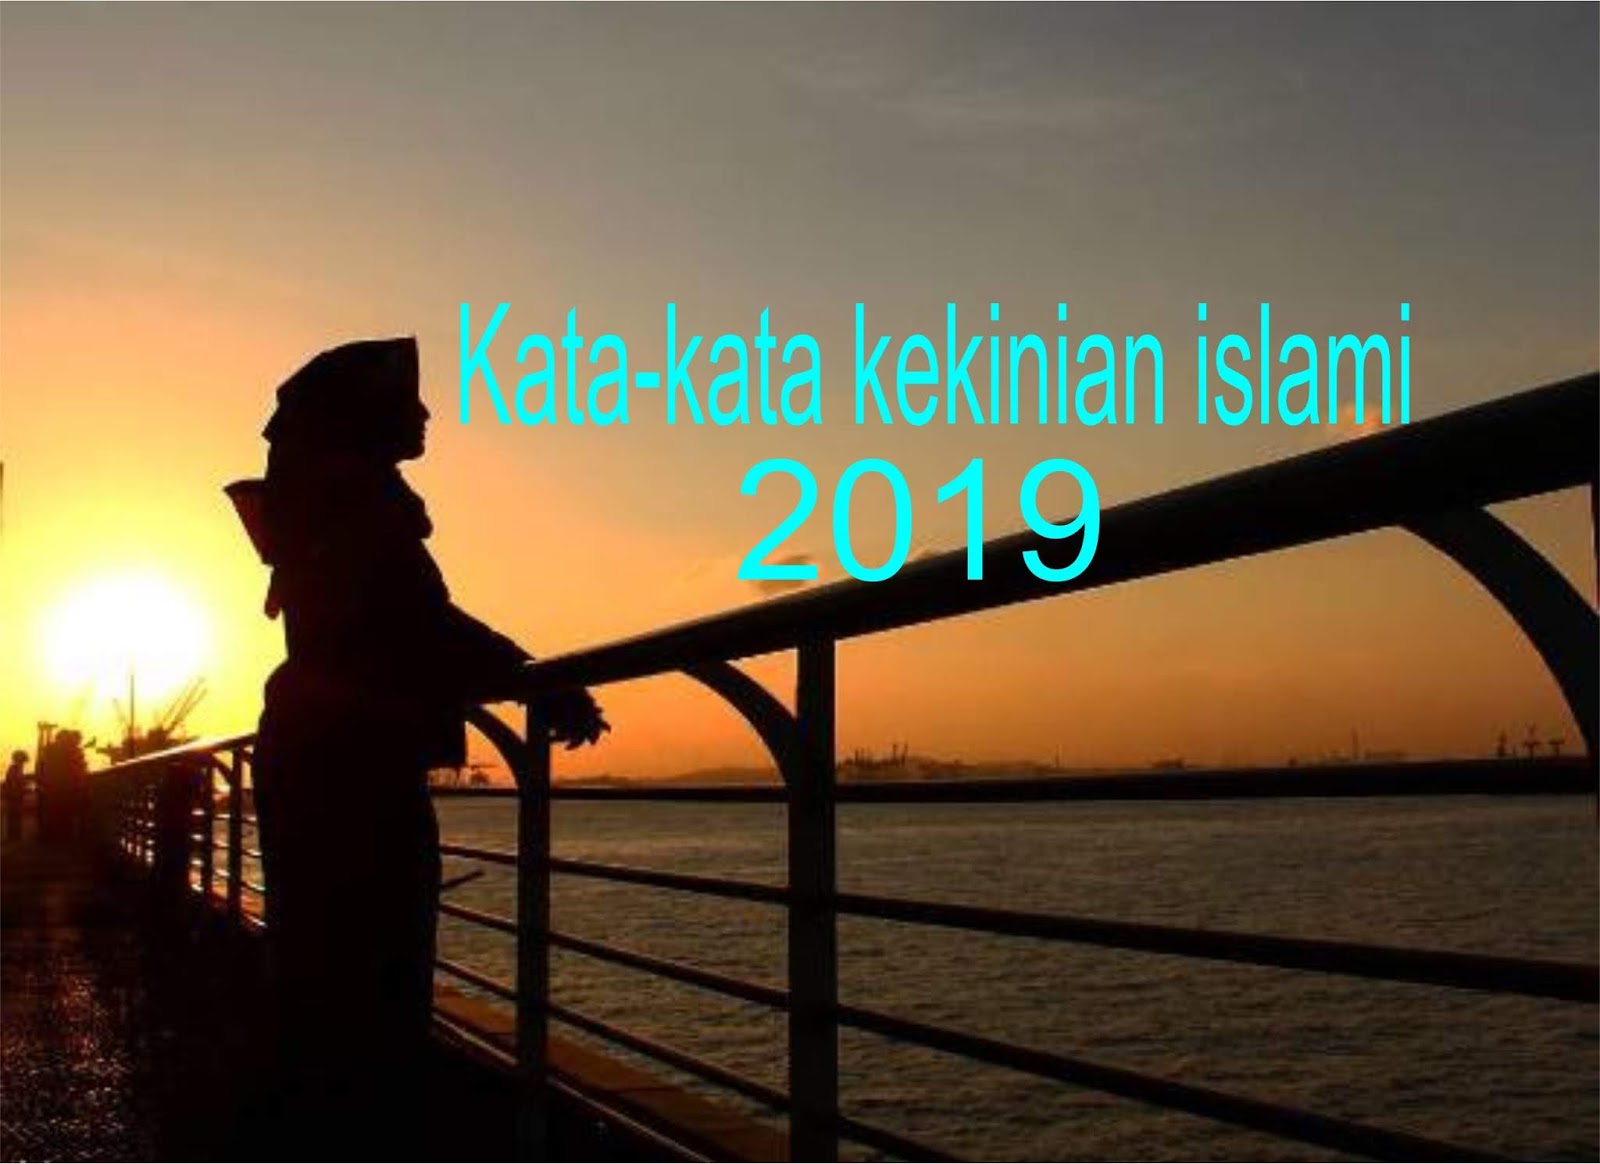 30 Kata Kata Cinta Islami Kekinian 2019